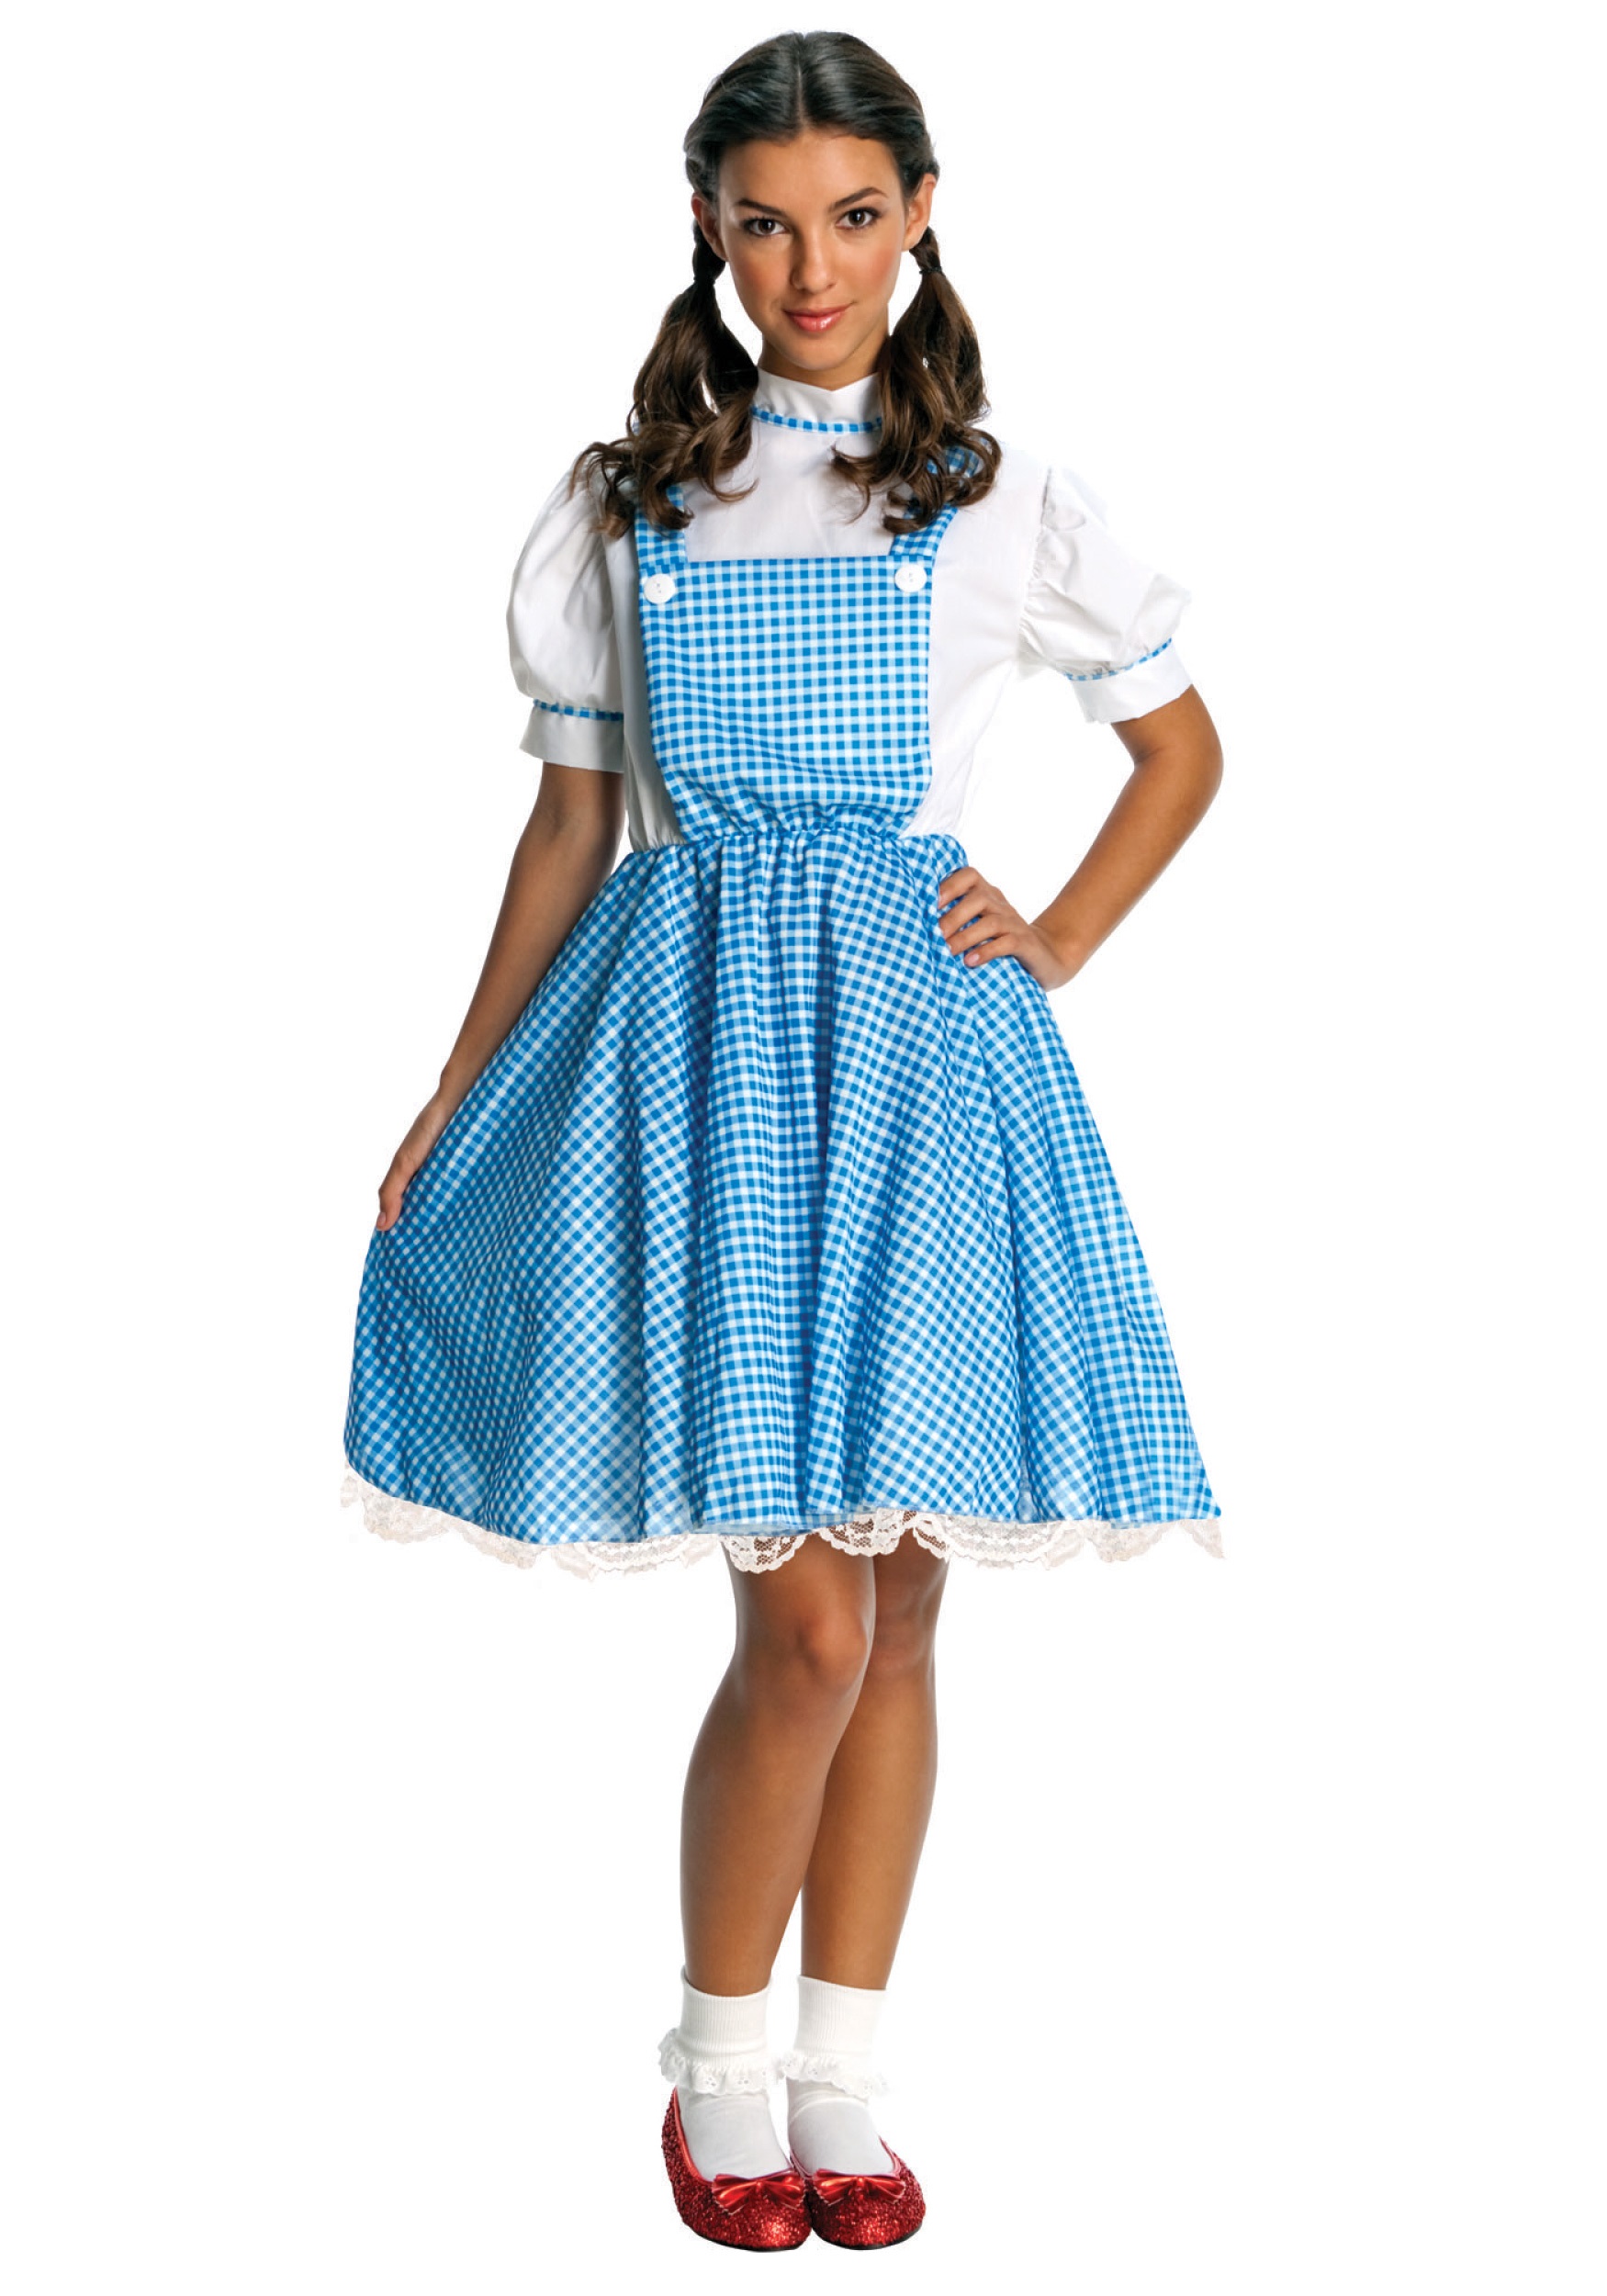 Reneecho Wizard of Oz Dorothy Costume For Girls Alice in Wonderland ...